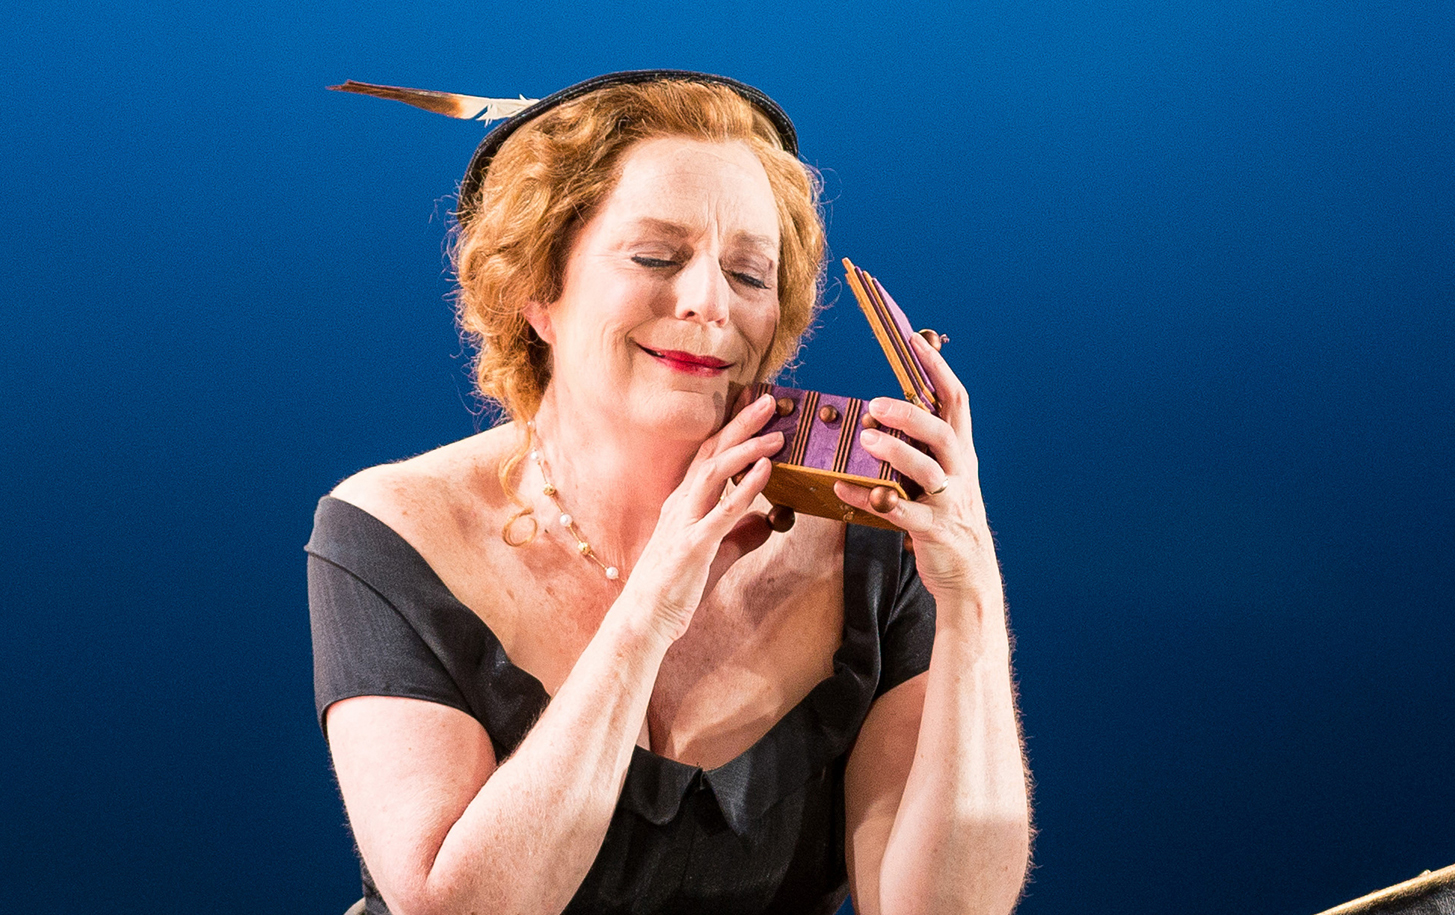 Laura Gordon featured in HAPPY DAYS by Samuel Beckett a 2019-20 Renaissance Theaterworks' production